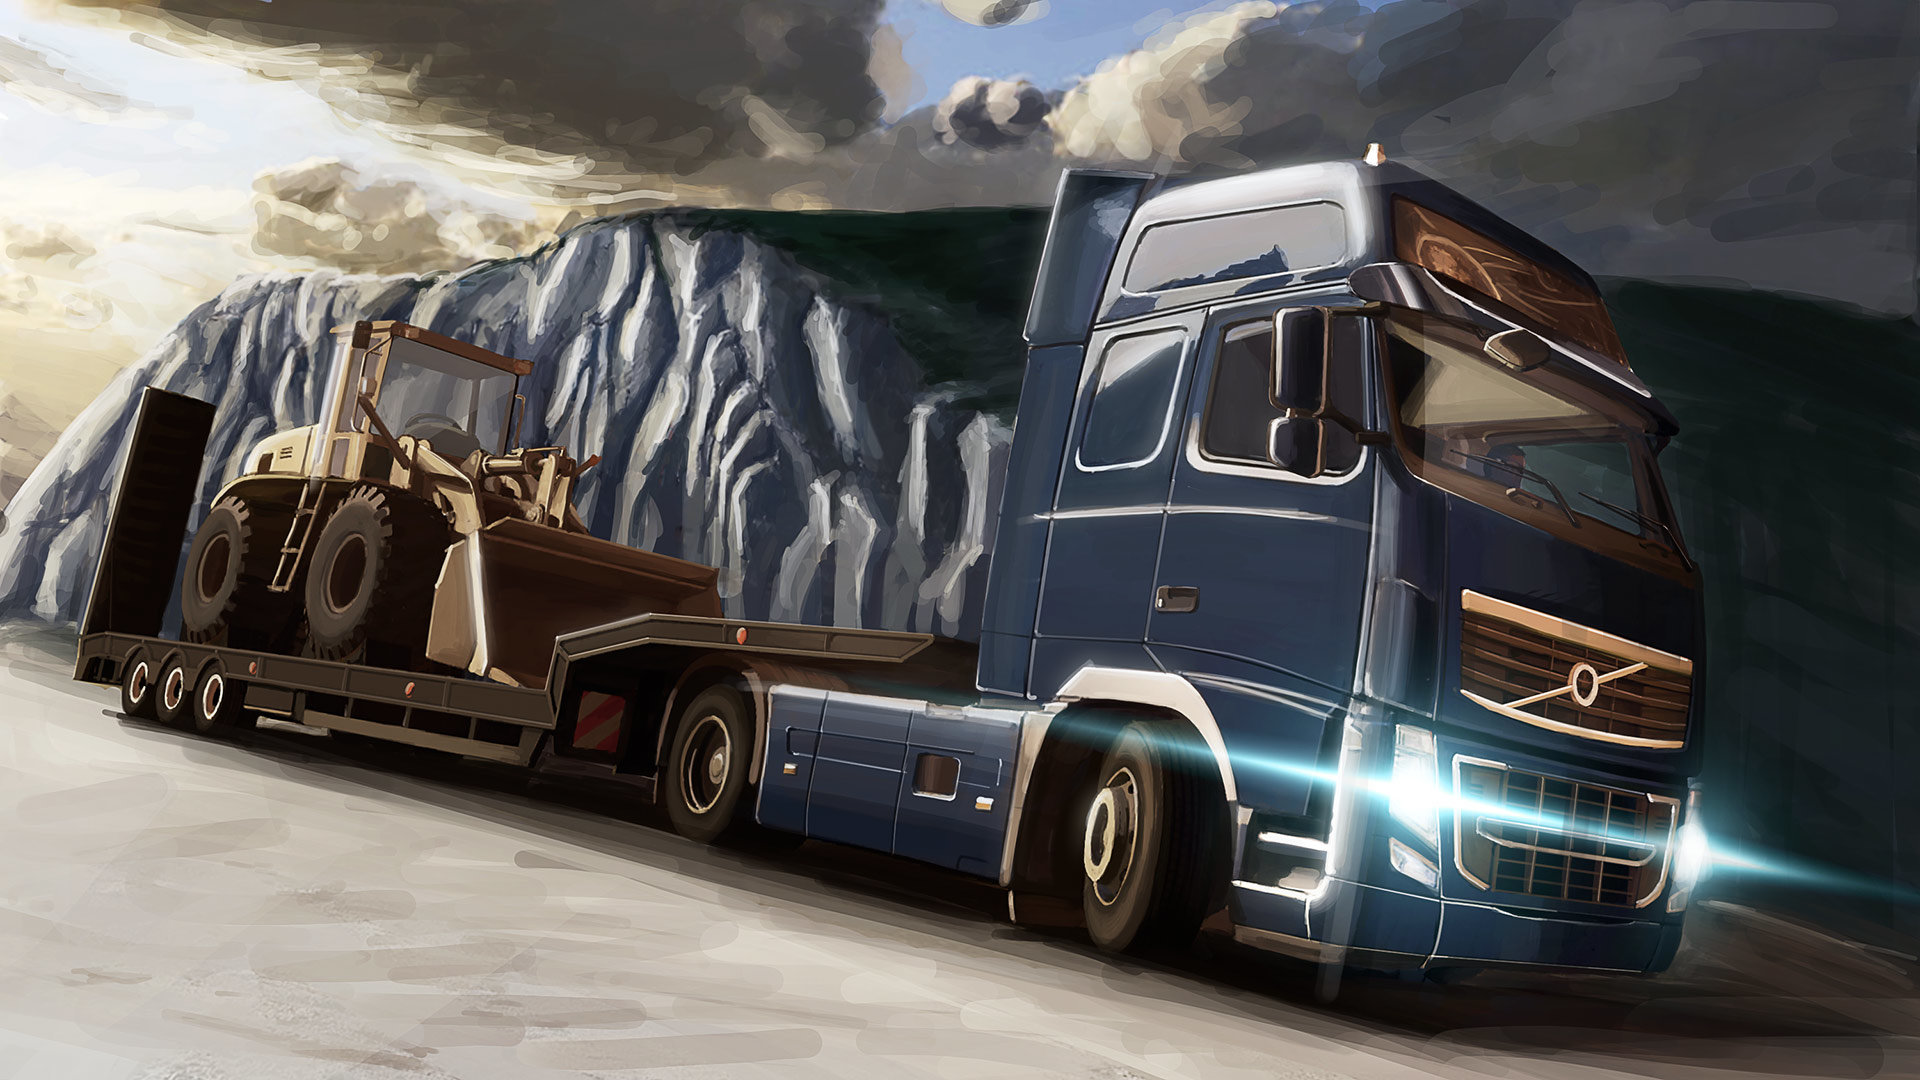 Euro Truck Simulator 2 Wallpapers 1920x1080 Full Hd 1080p Desktop Backgrounds